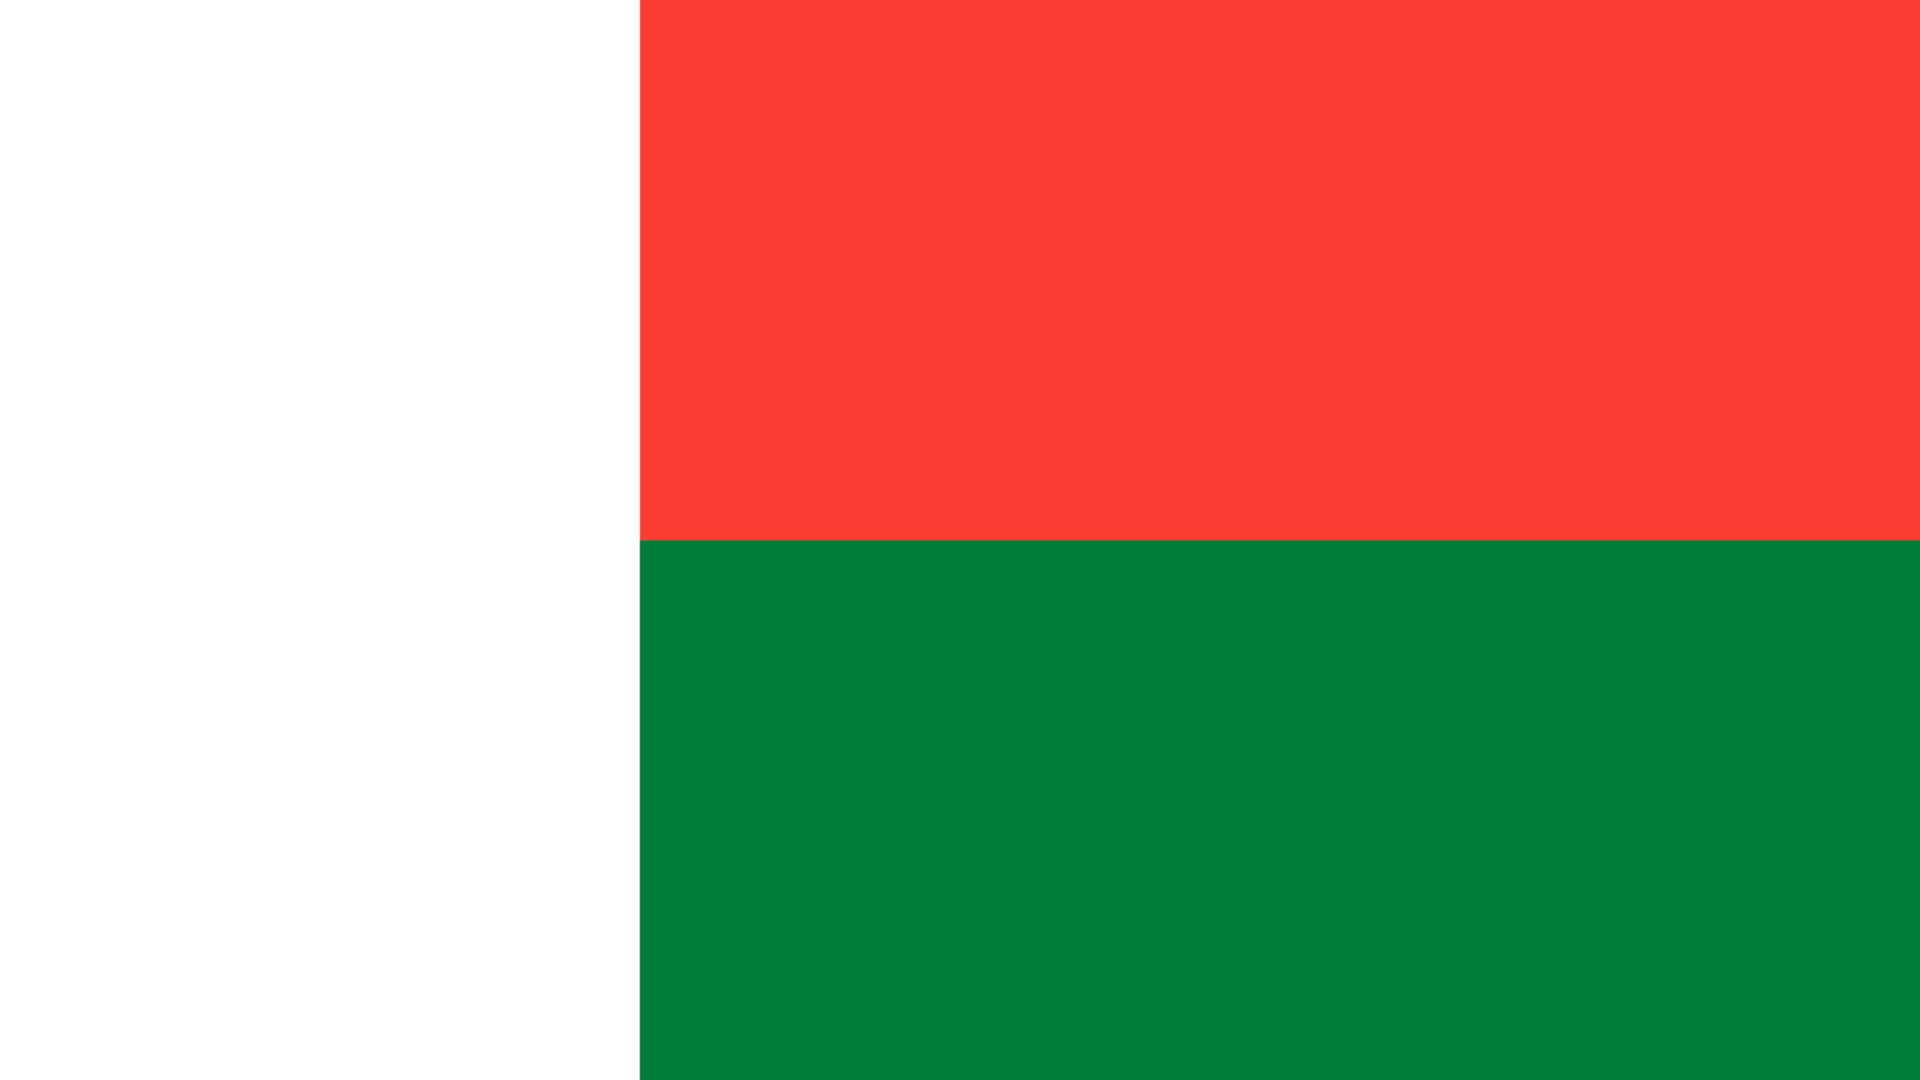 Madagascar Flag, High Definition, High Quality, Widescreen